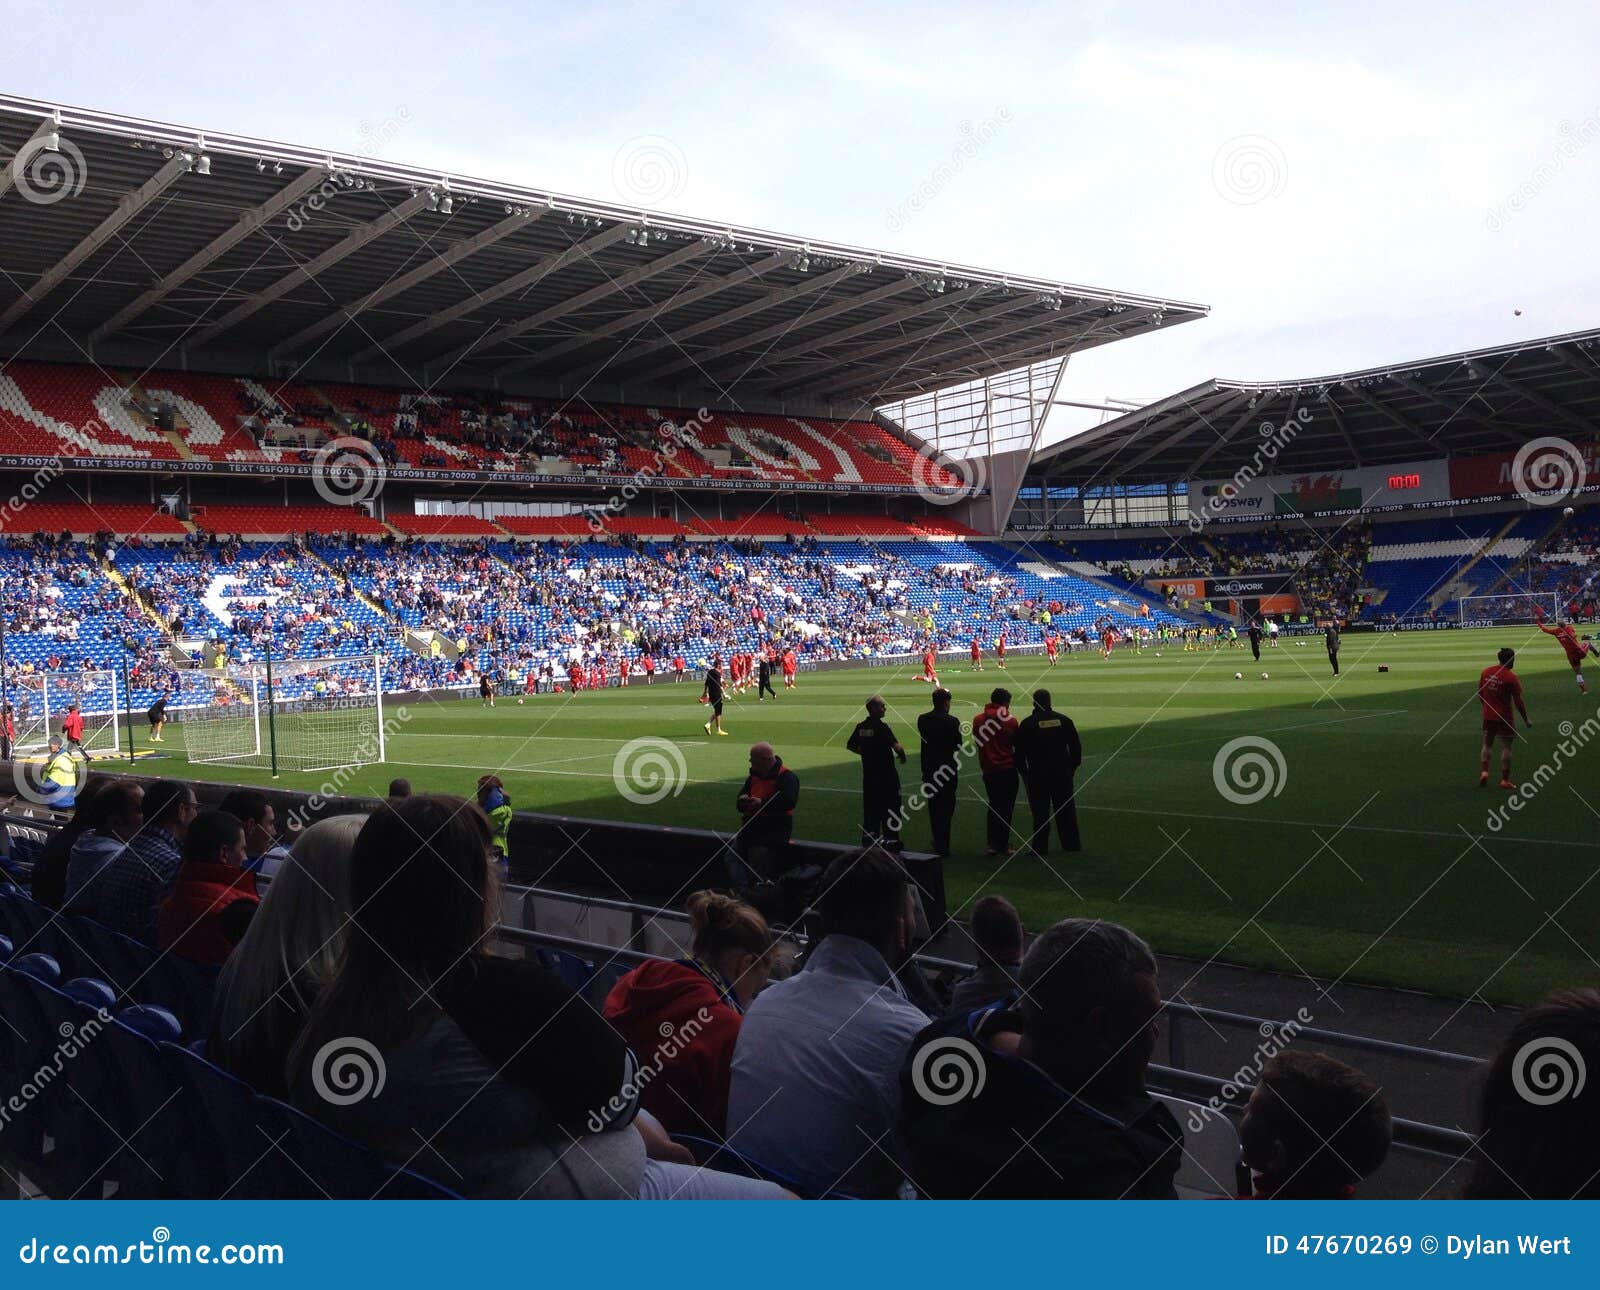 735 Cardiff City Football Stadium Images, Stock Photos, 3D objects